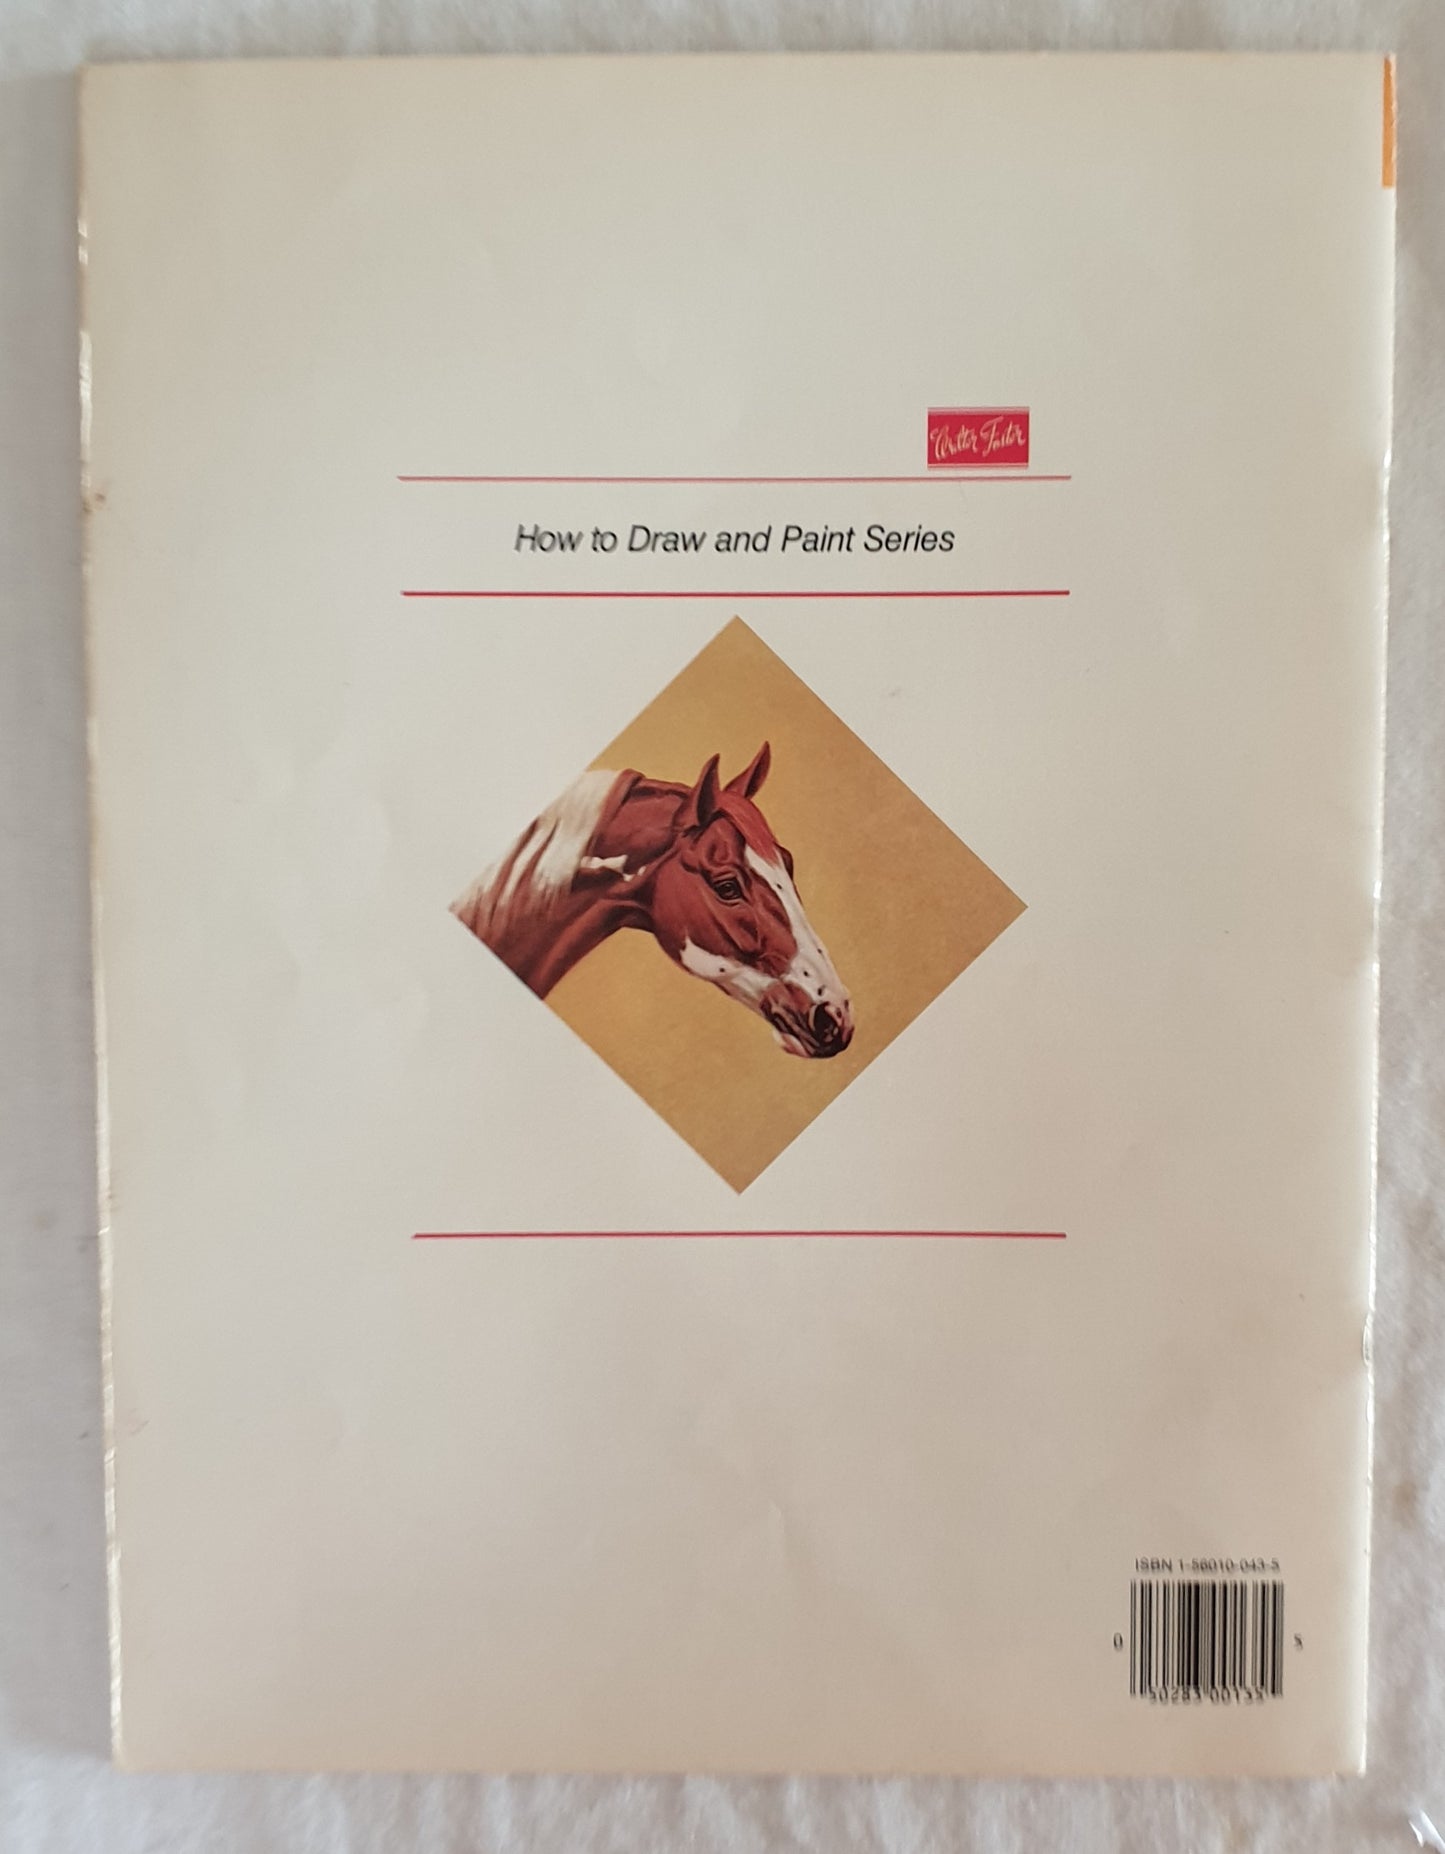 Horses Heads by Don Schwartz